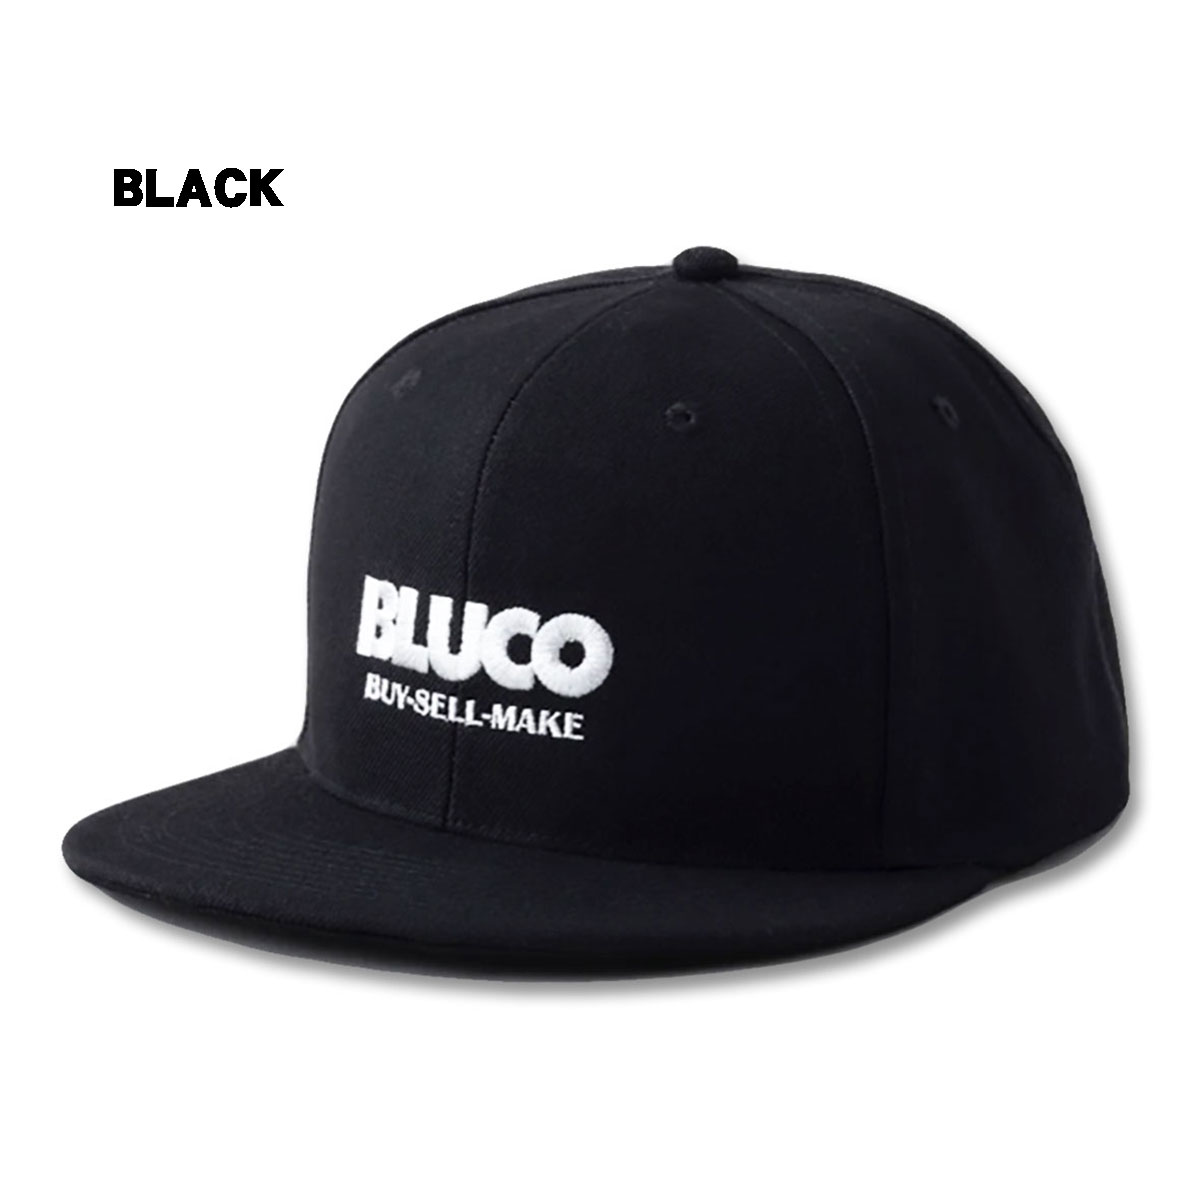 BLUCO(ブルコ) OL-61-019 6-PANEL CAP -LOGO- 4色(BLK/NVY...